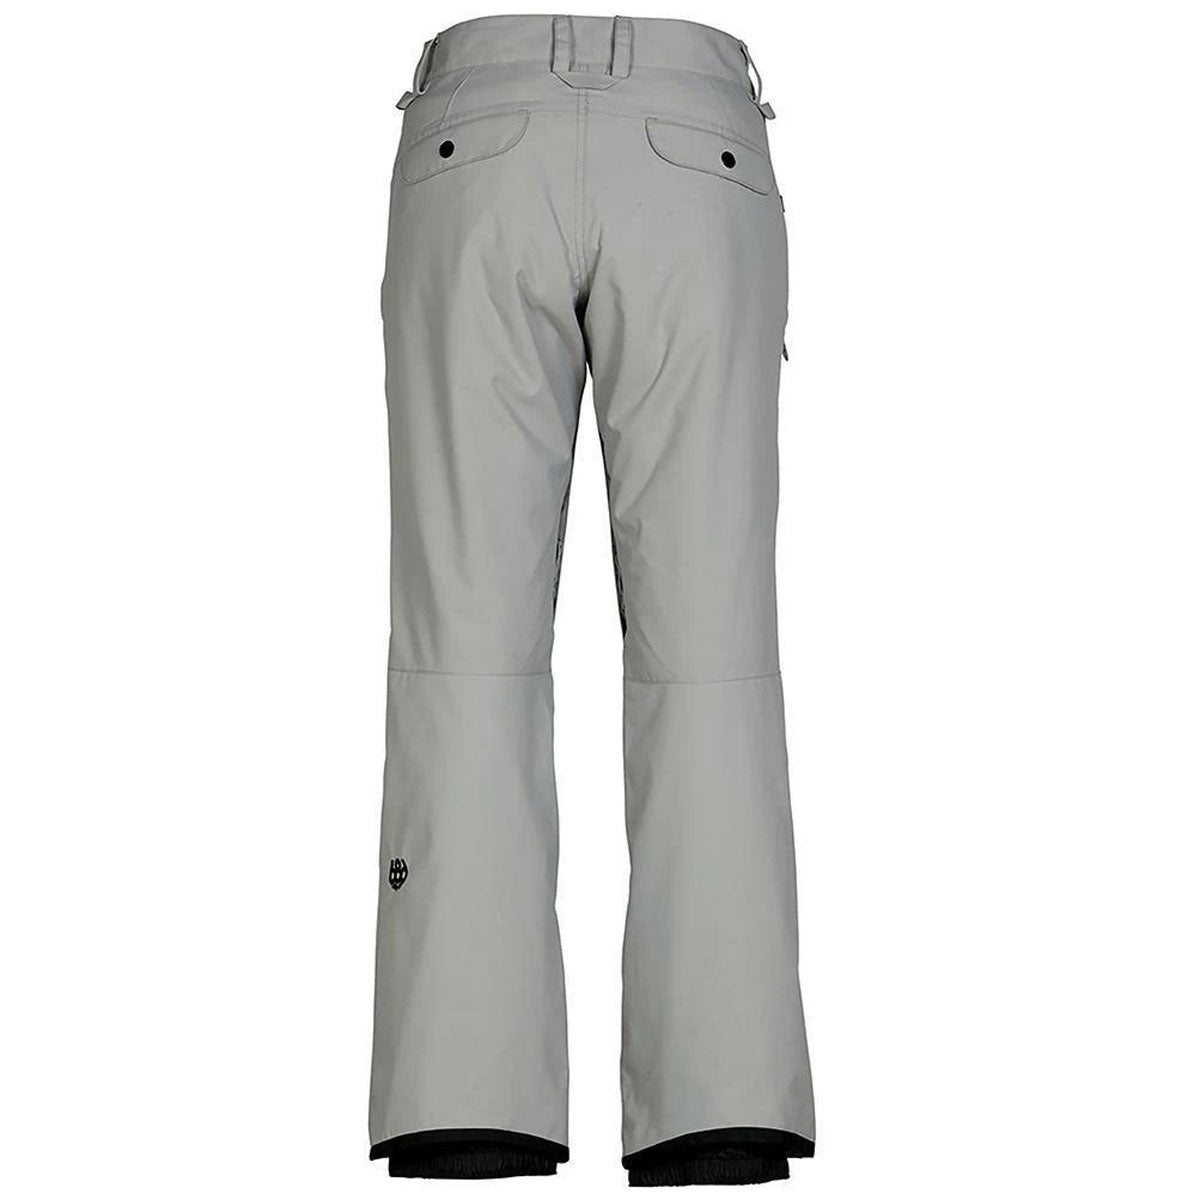 686 Womens Standard Shell Snowboard Pants - Light Grey image 2